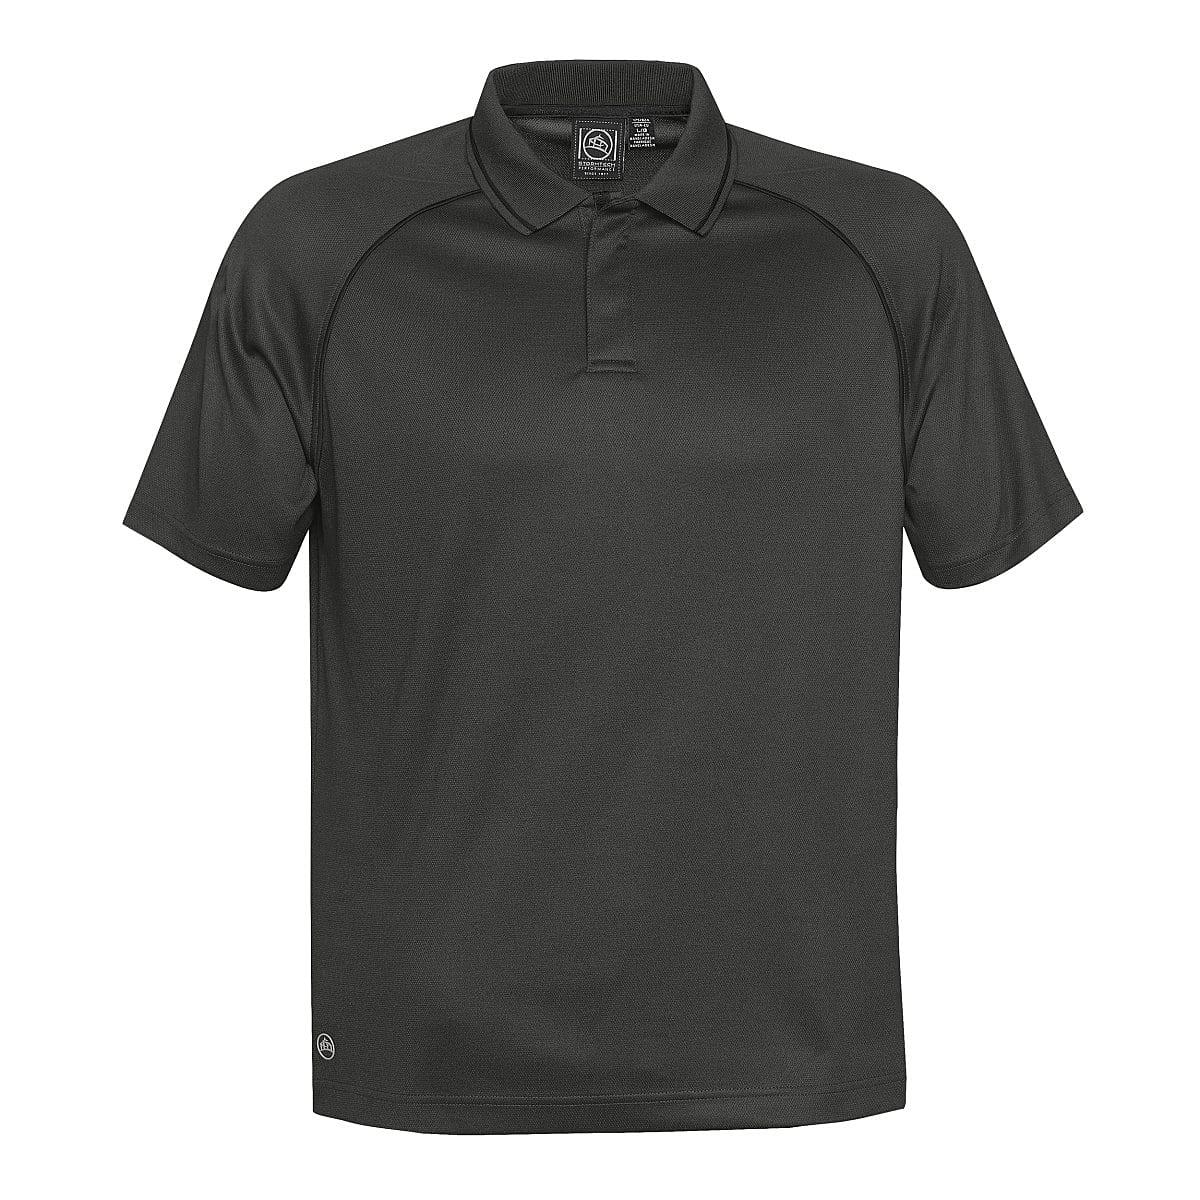 Stormtech Mens Tritium Polo Shirt in Carbon / Black (Product Code: GPX-4)